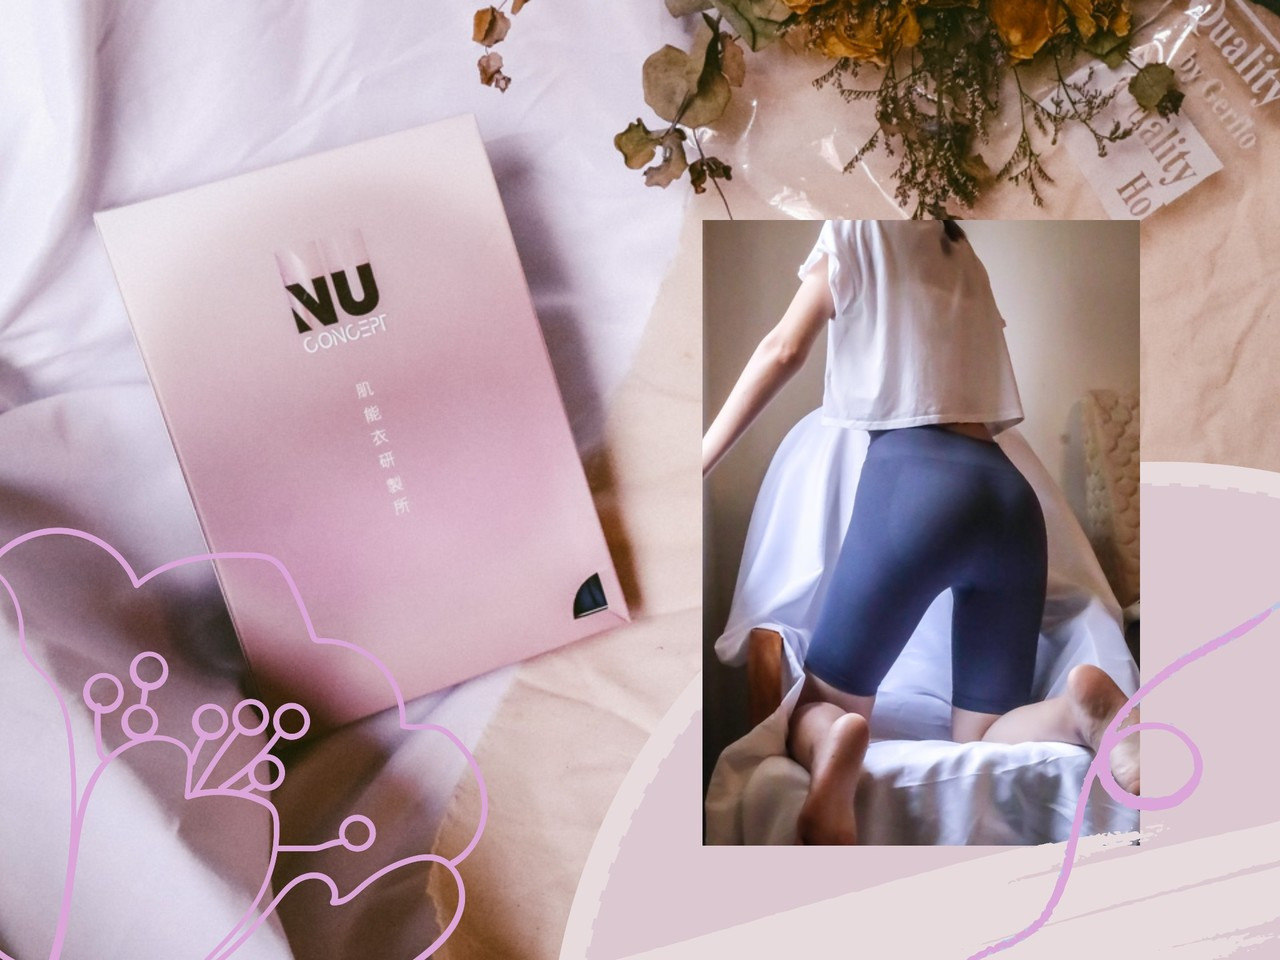 NU Concept 肌能衣研製所的美敷肌能壓力褲，用車線最少化的設計降低摩擦，直接穿在身上也能自在活動